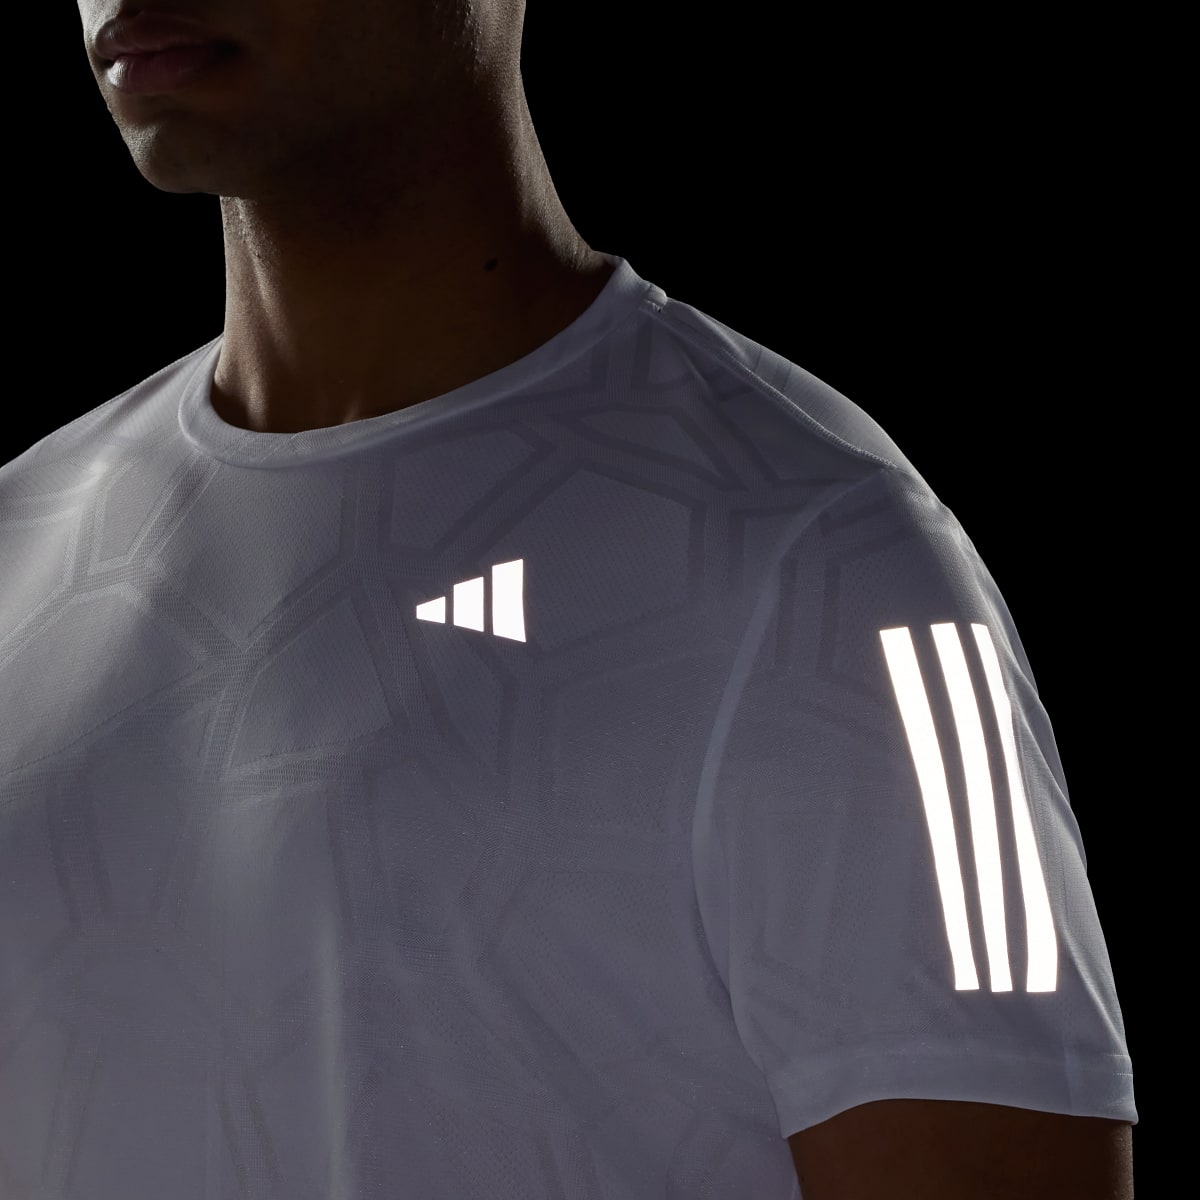 Adidas Own the Run Carbon Measured T-Shirt. 7